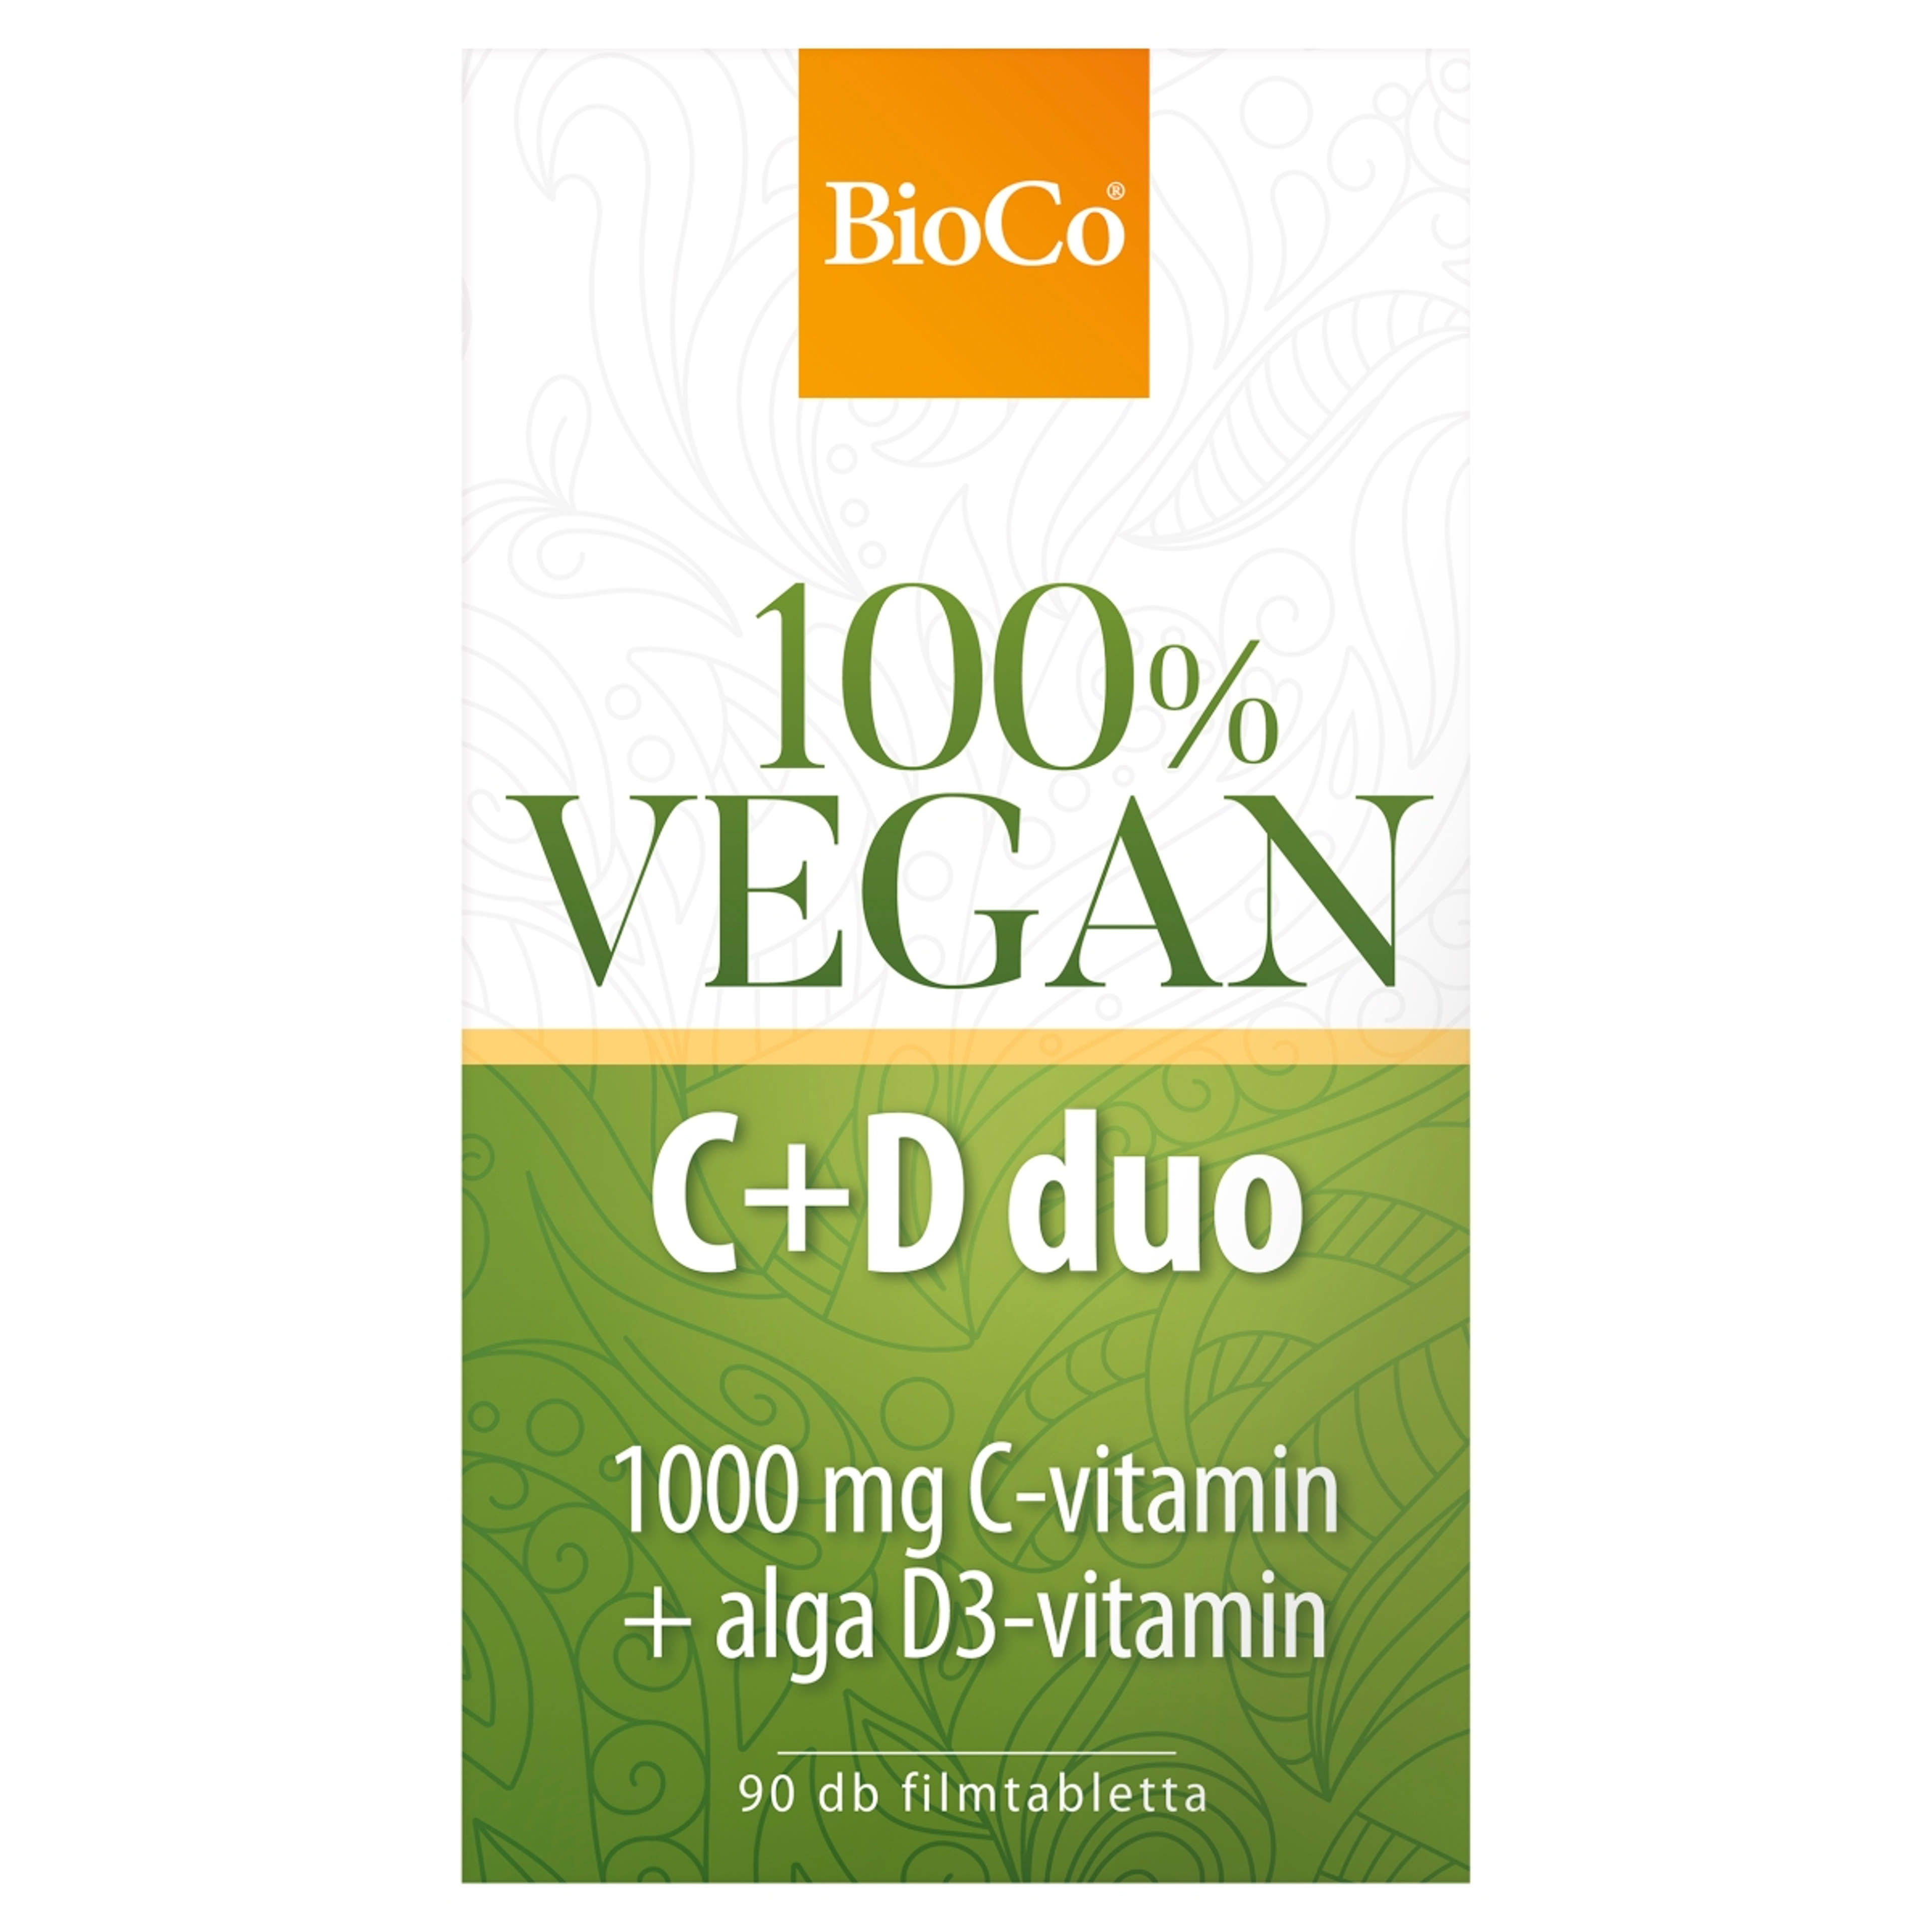 Bioco vegán C+D duo filmtabletta - 90 db-1